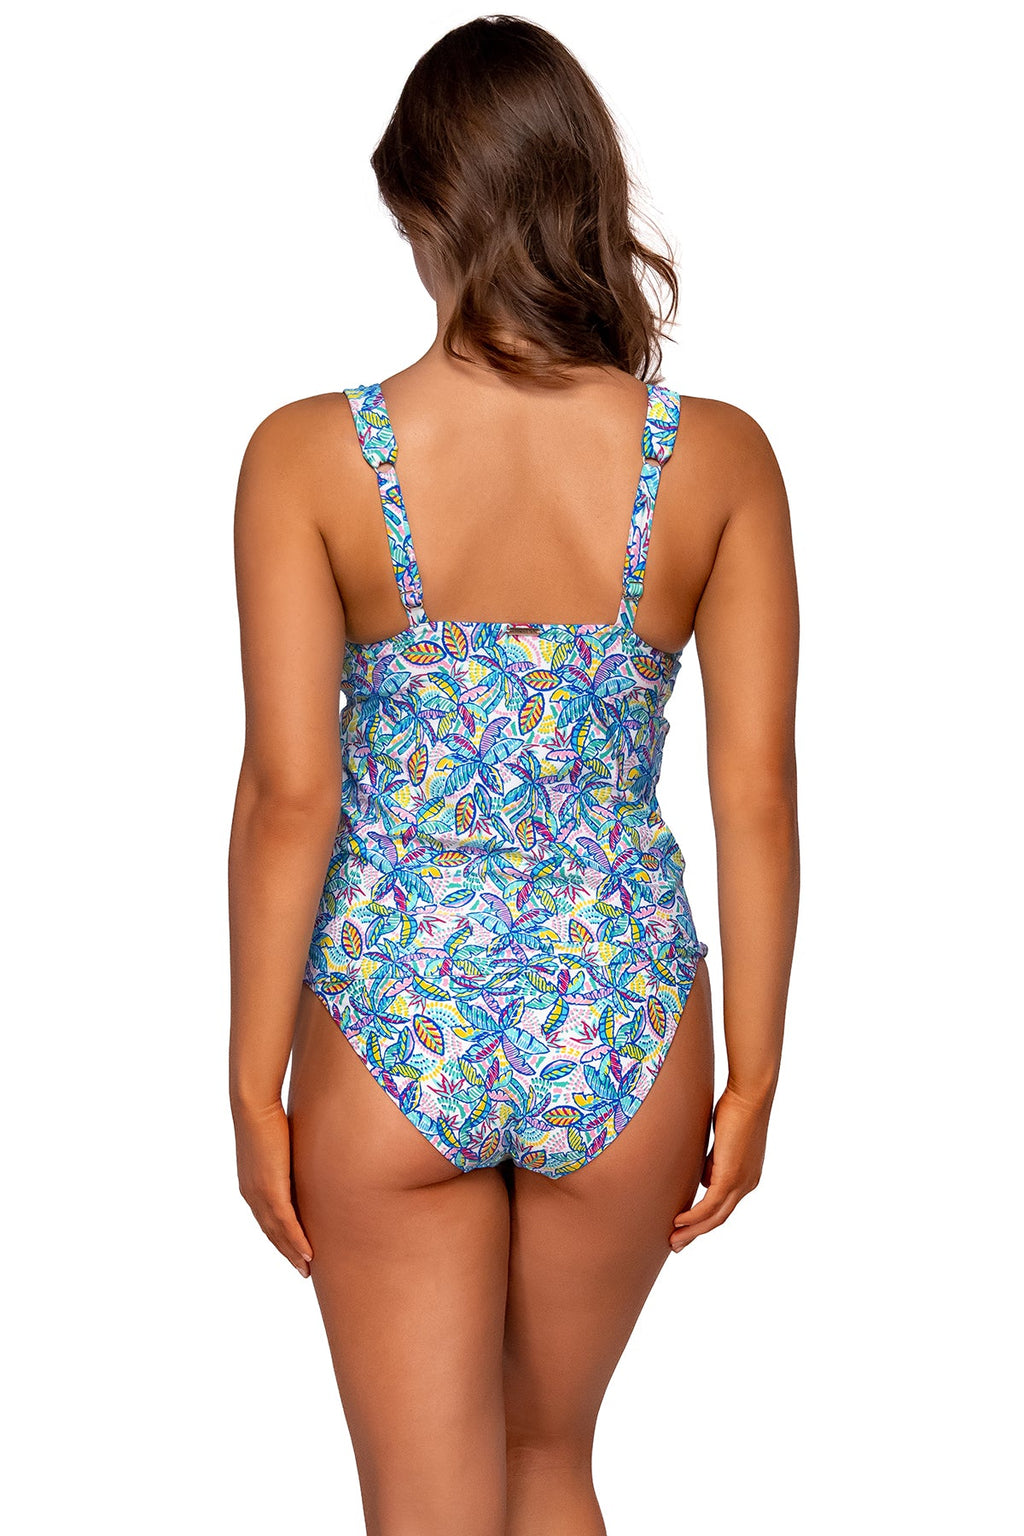 D Cup Swimwear  D-Cup Bikini Tops & Swimsuits for Women – Sunbug